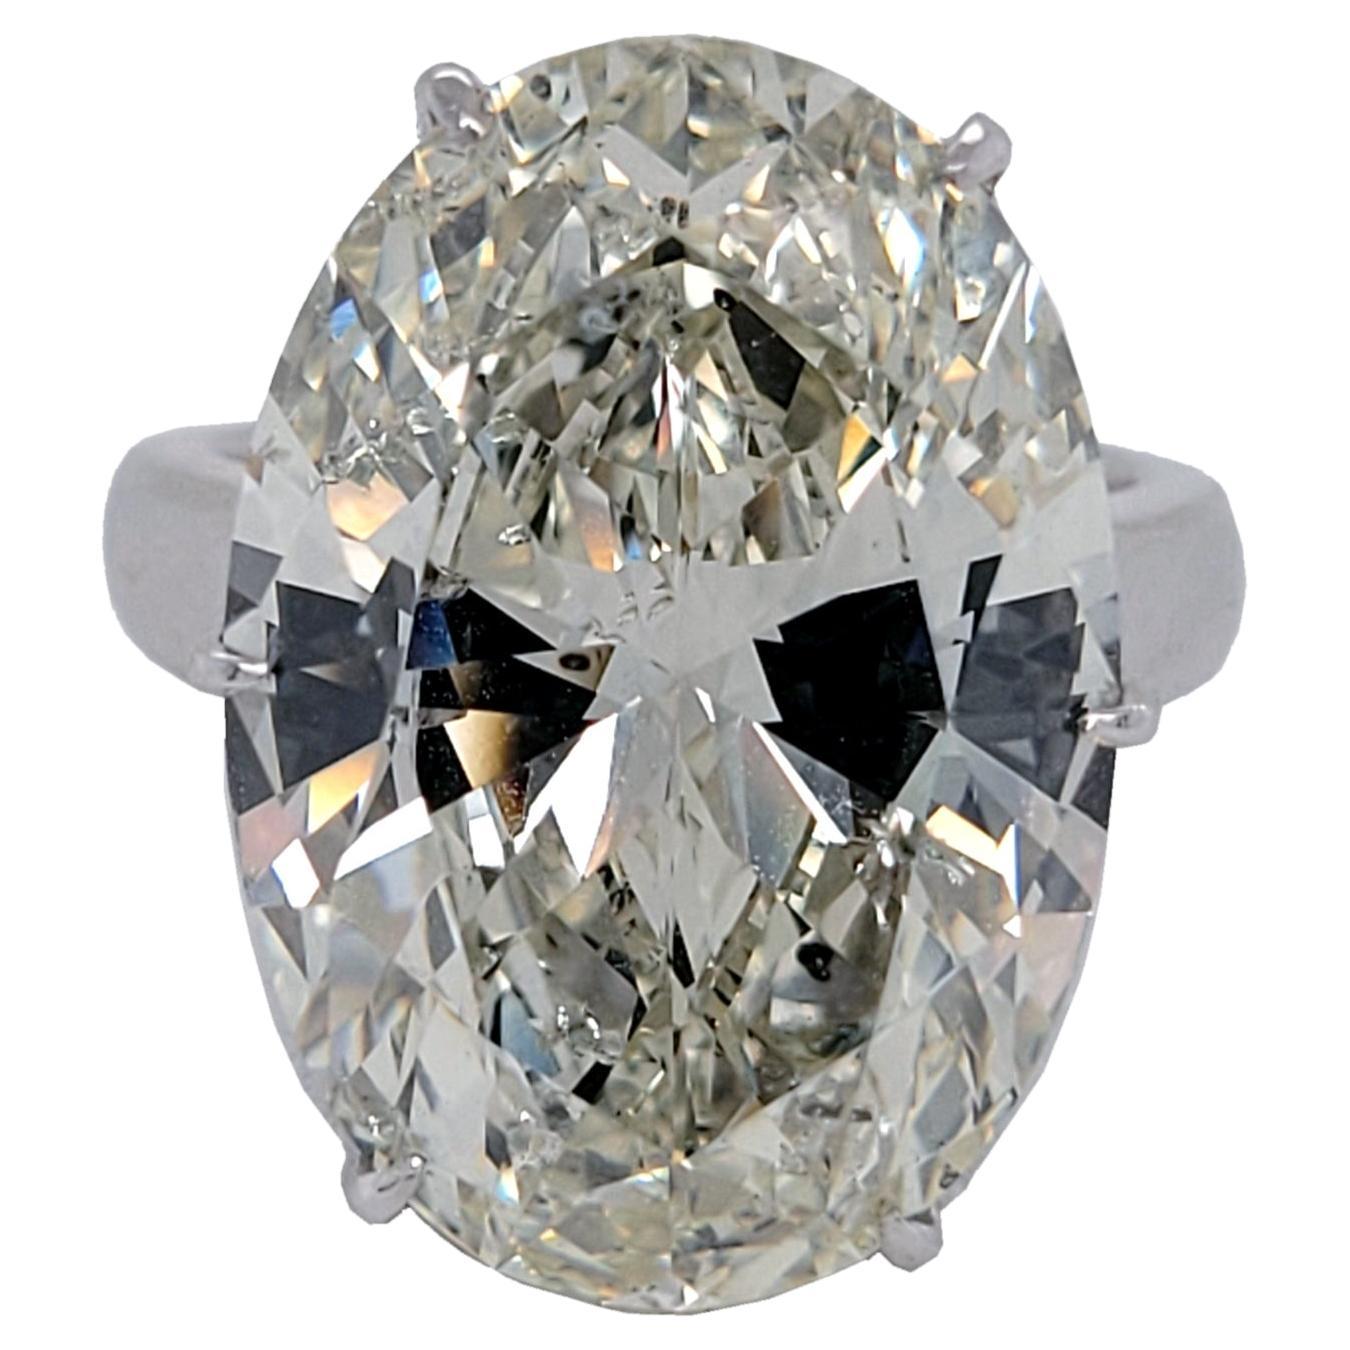 GIA 17.03 Carat M/SI2 Oval Diamond Pave Set Engagement Ring